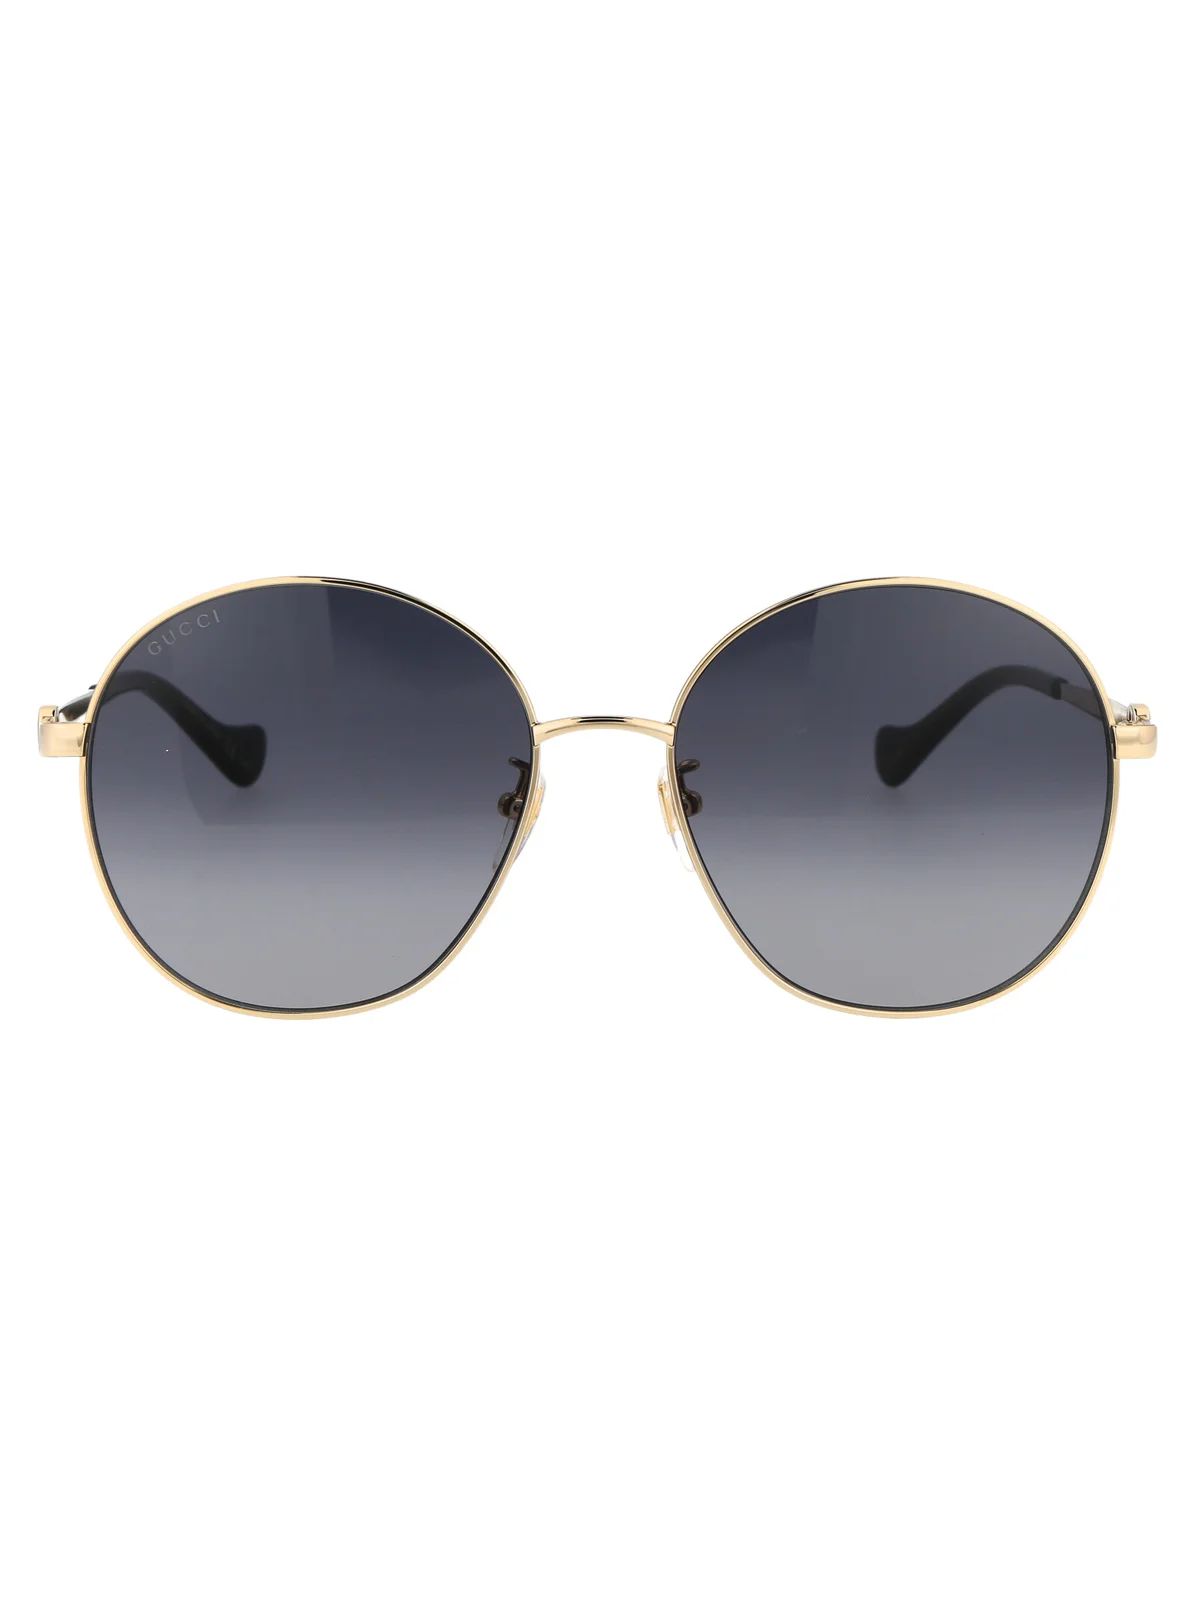 Gucci Eyewear Round Frame Sunglasses | Cettire Global